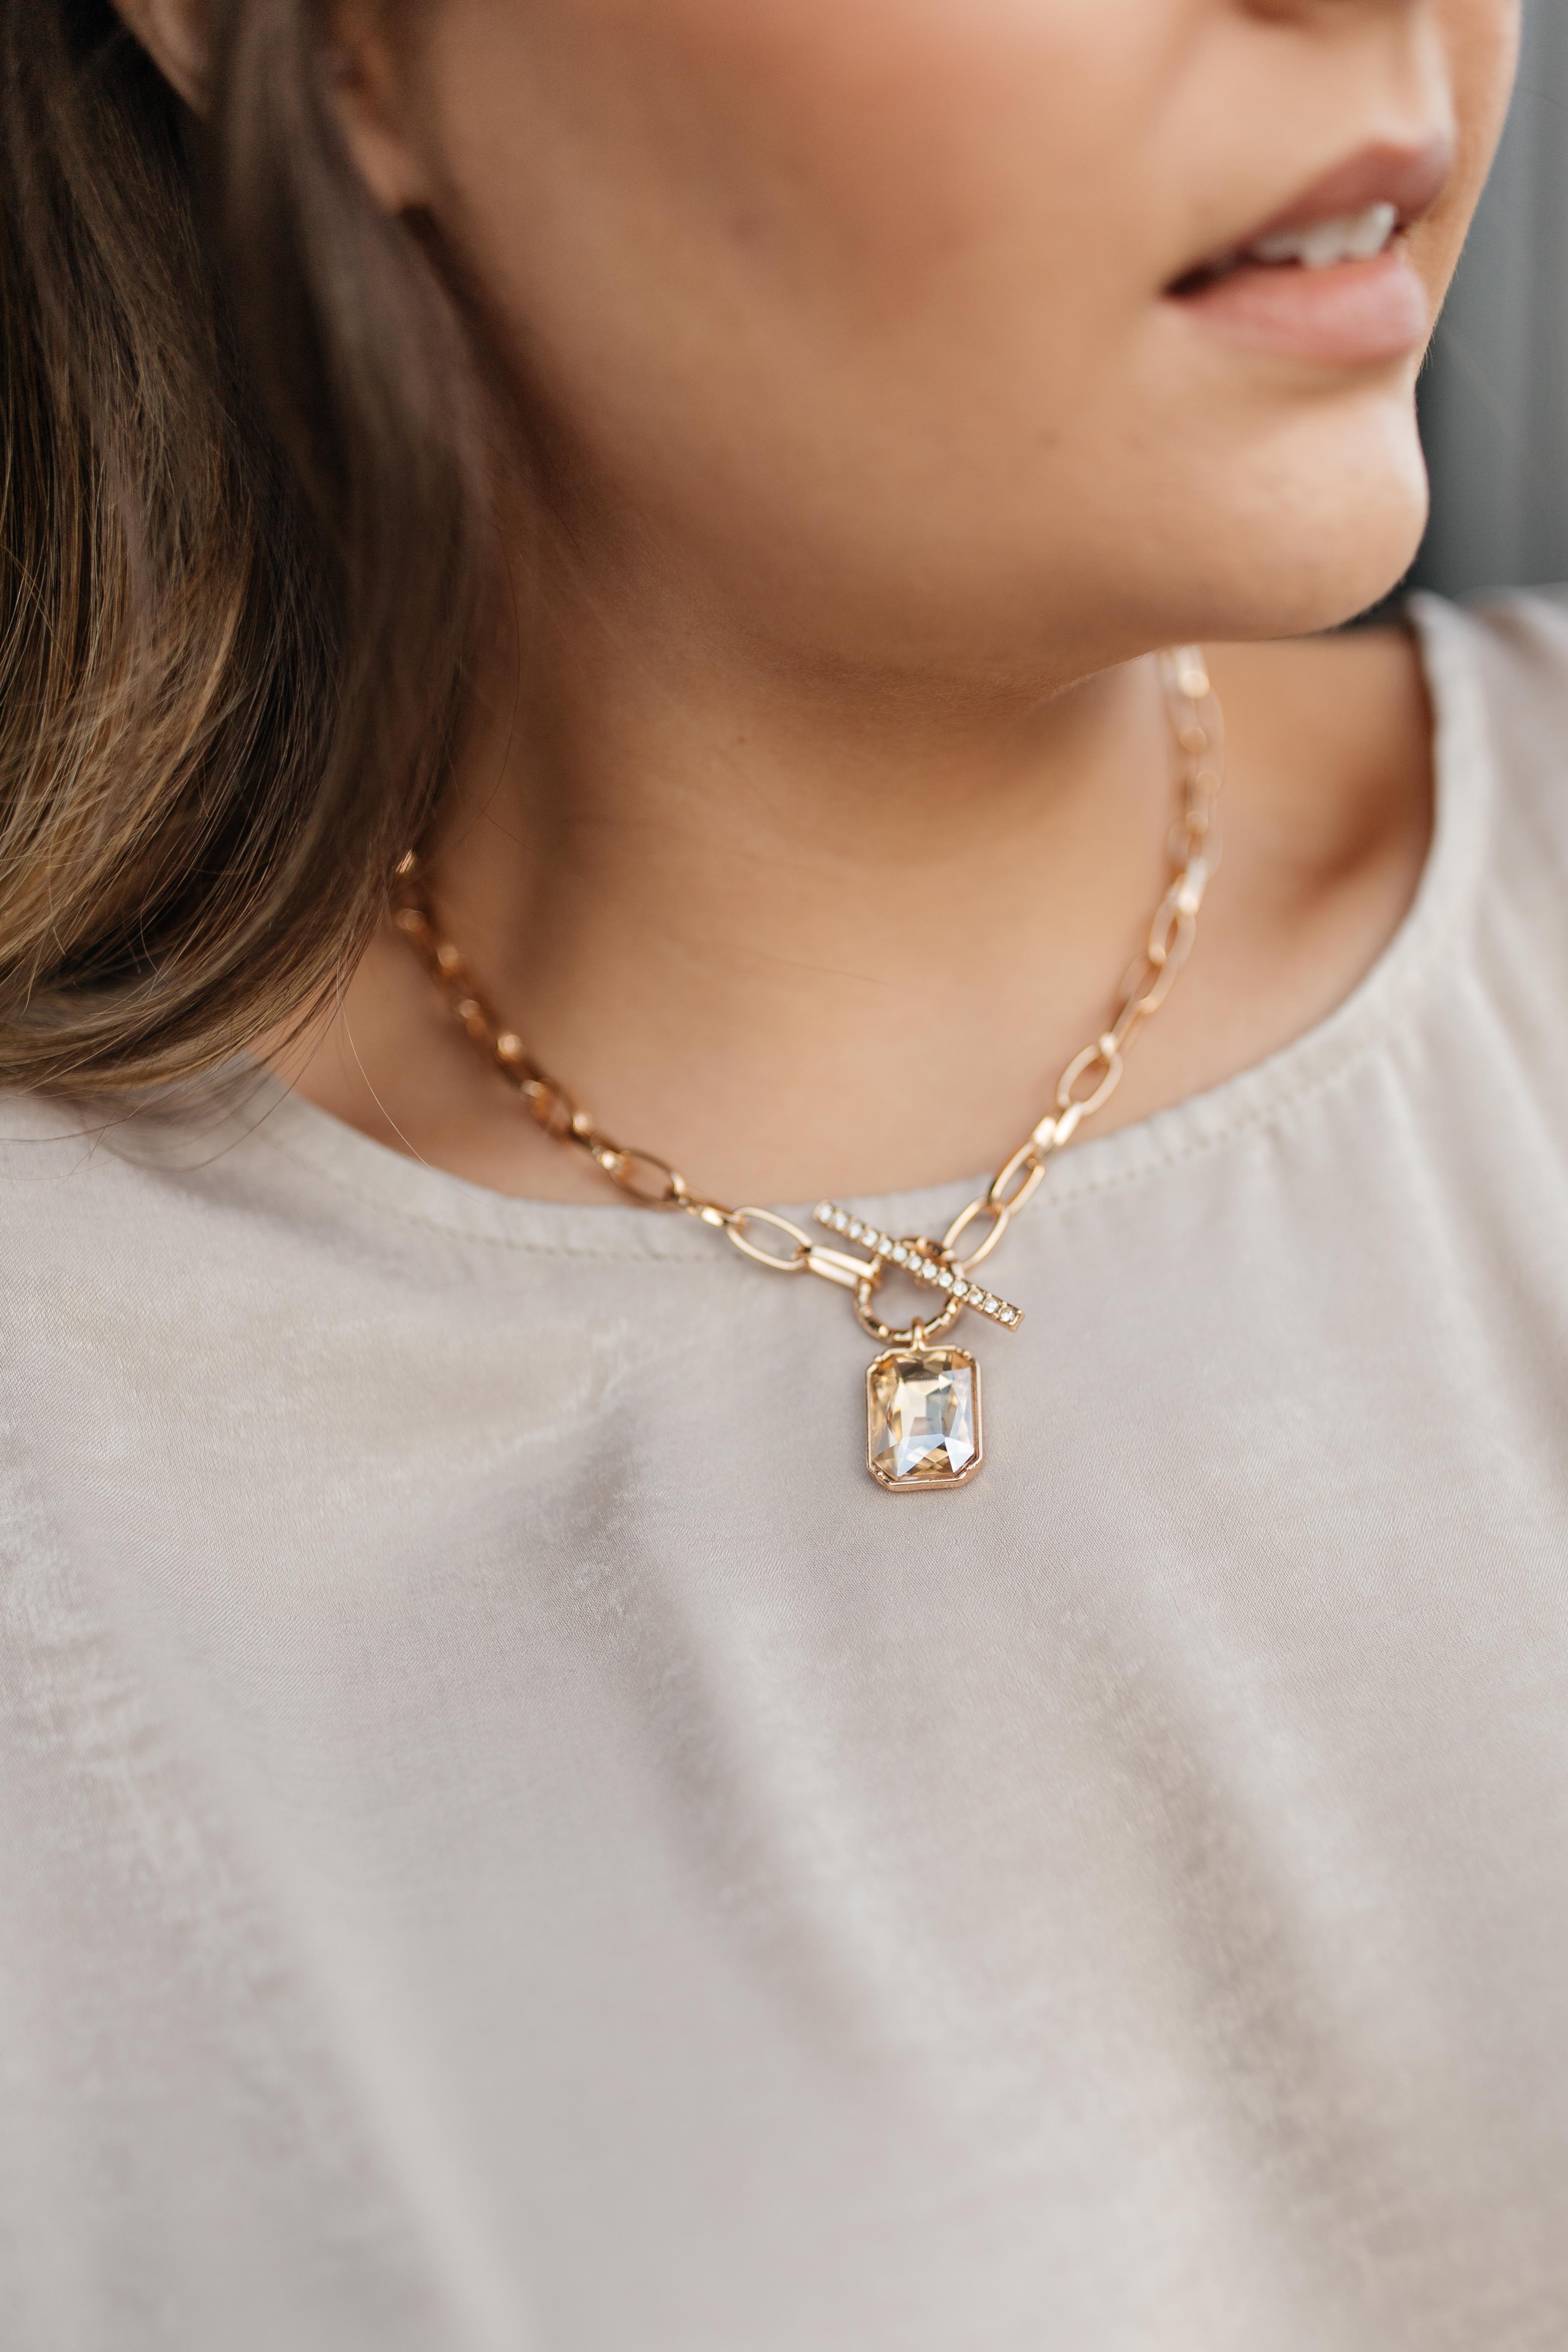 The Jewel Pendant Necklace